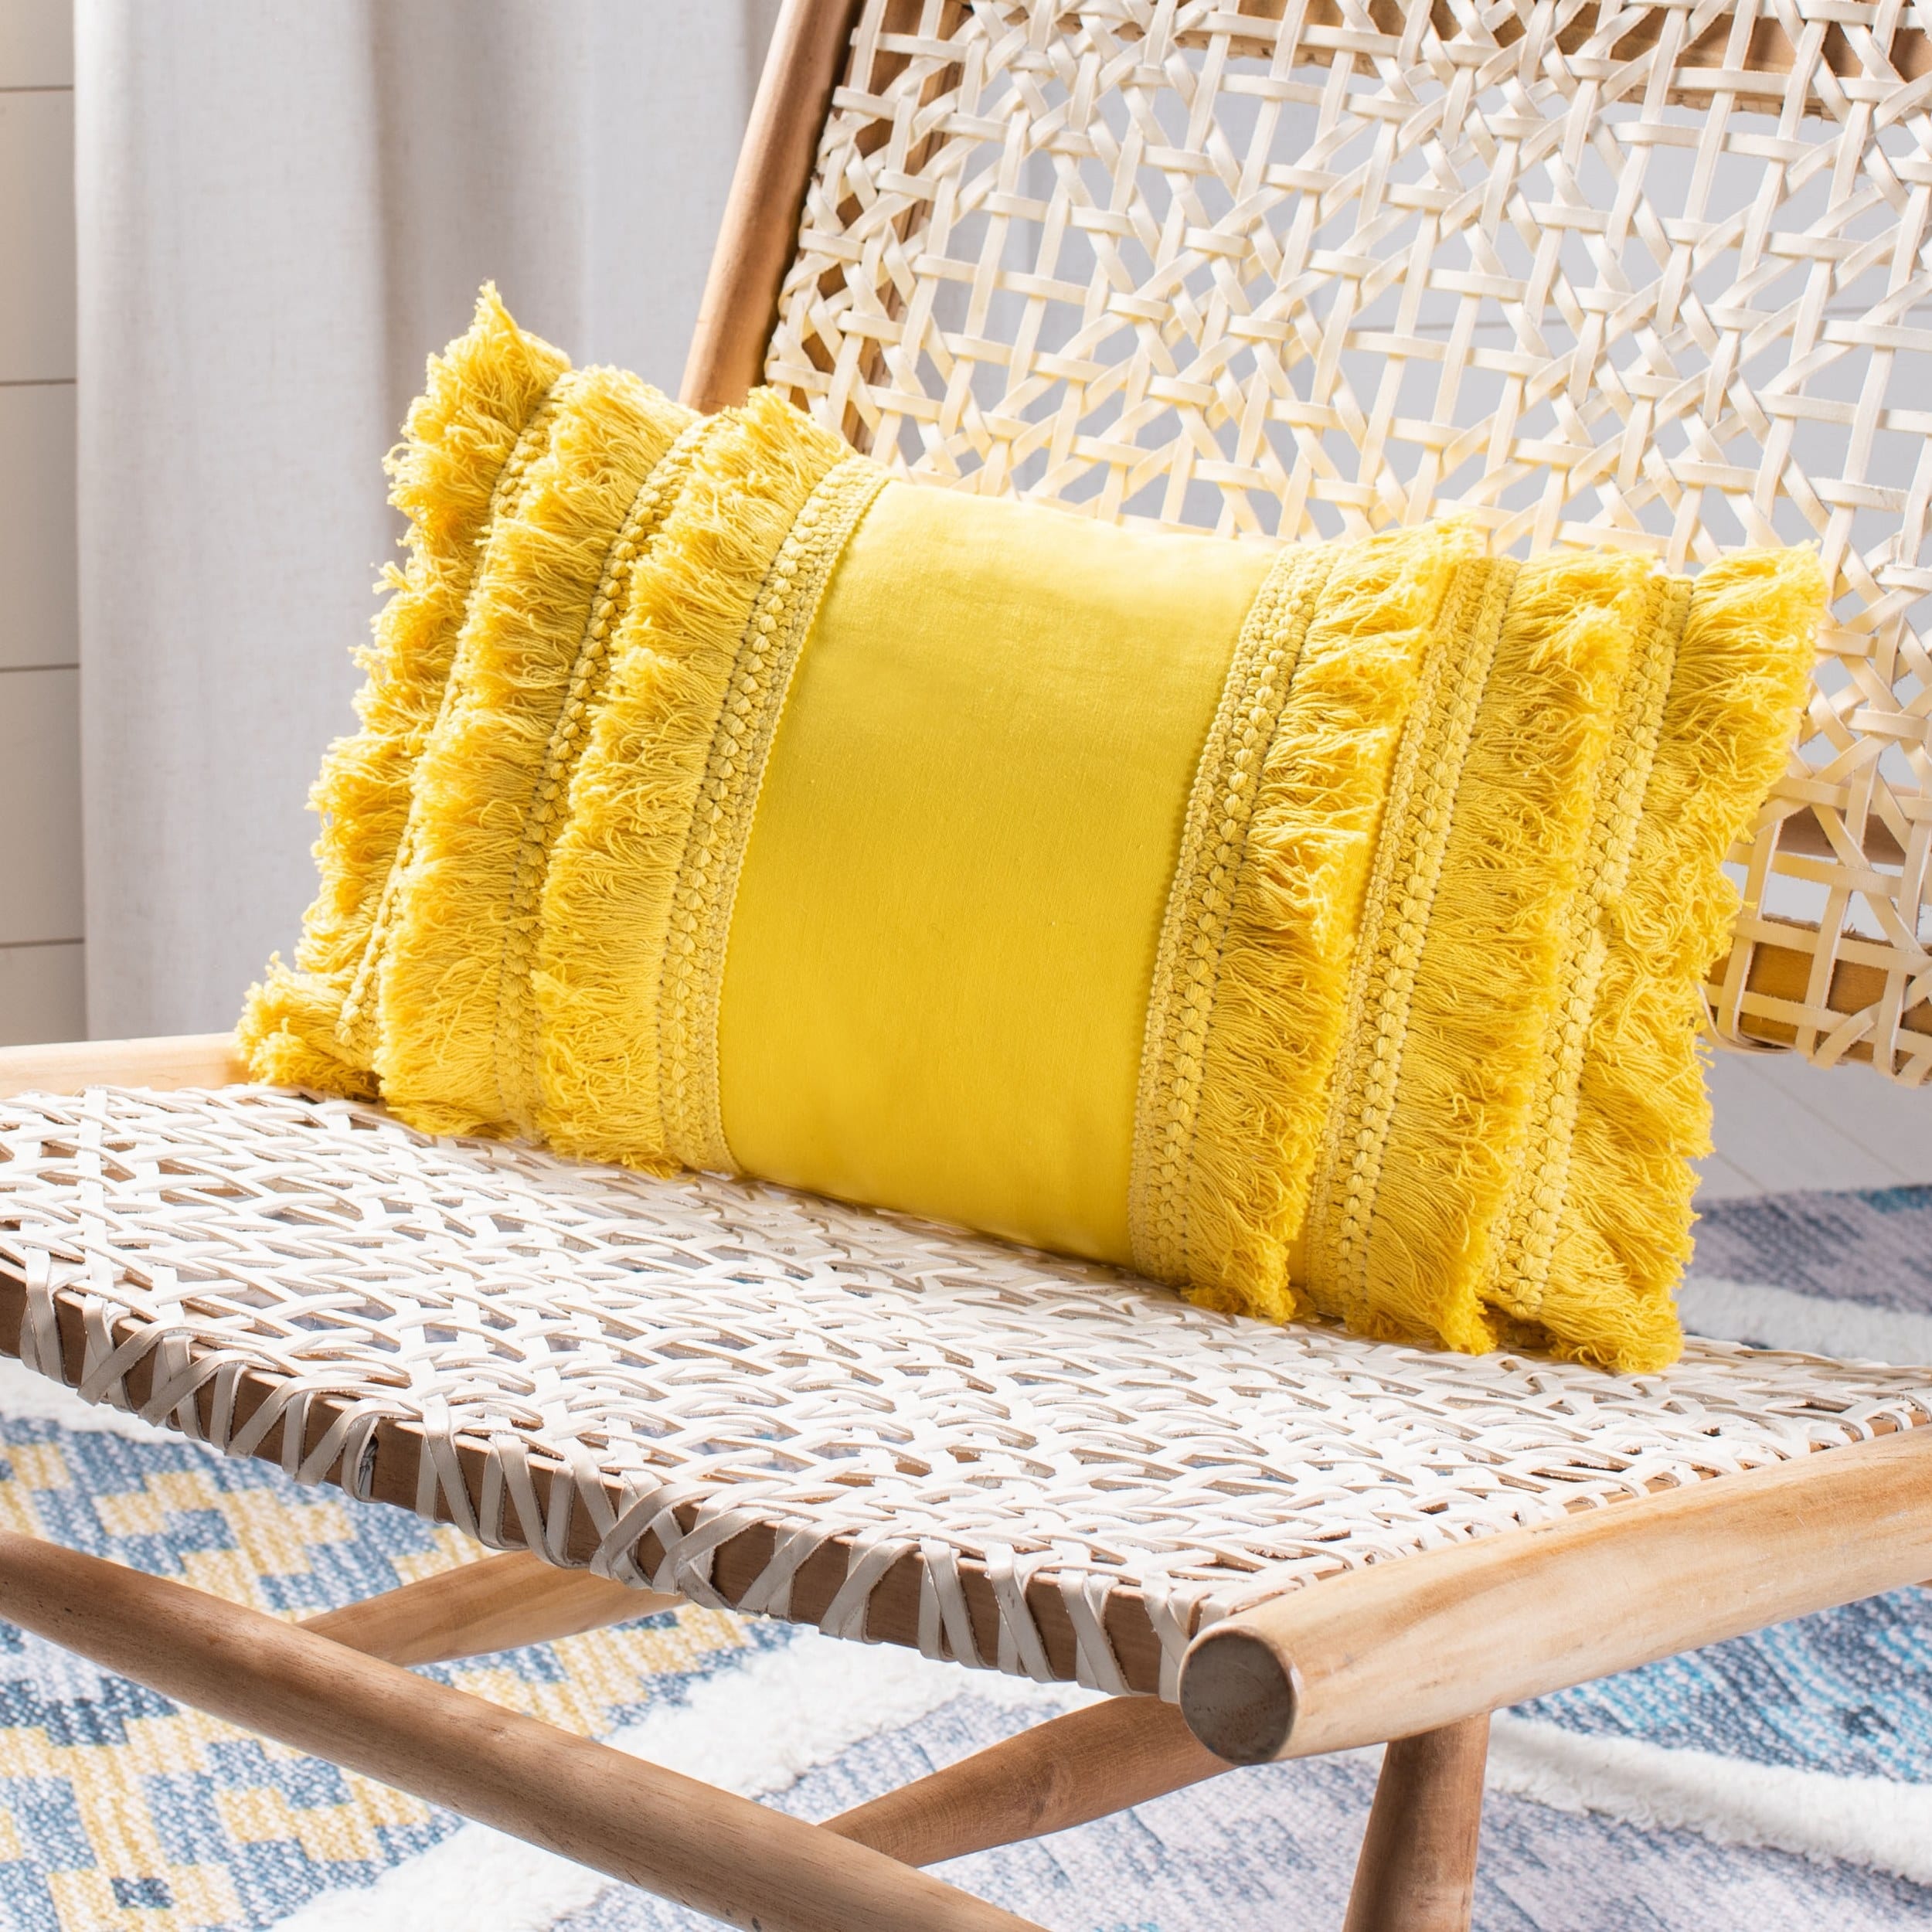 Safavieh Textured Box Stitch Decorative Throw Pillows - Set of 2